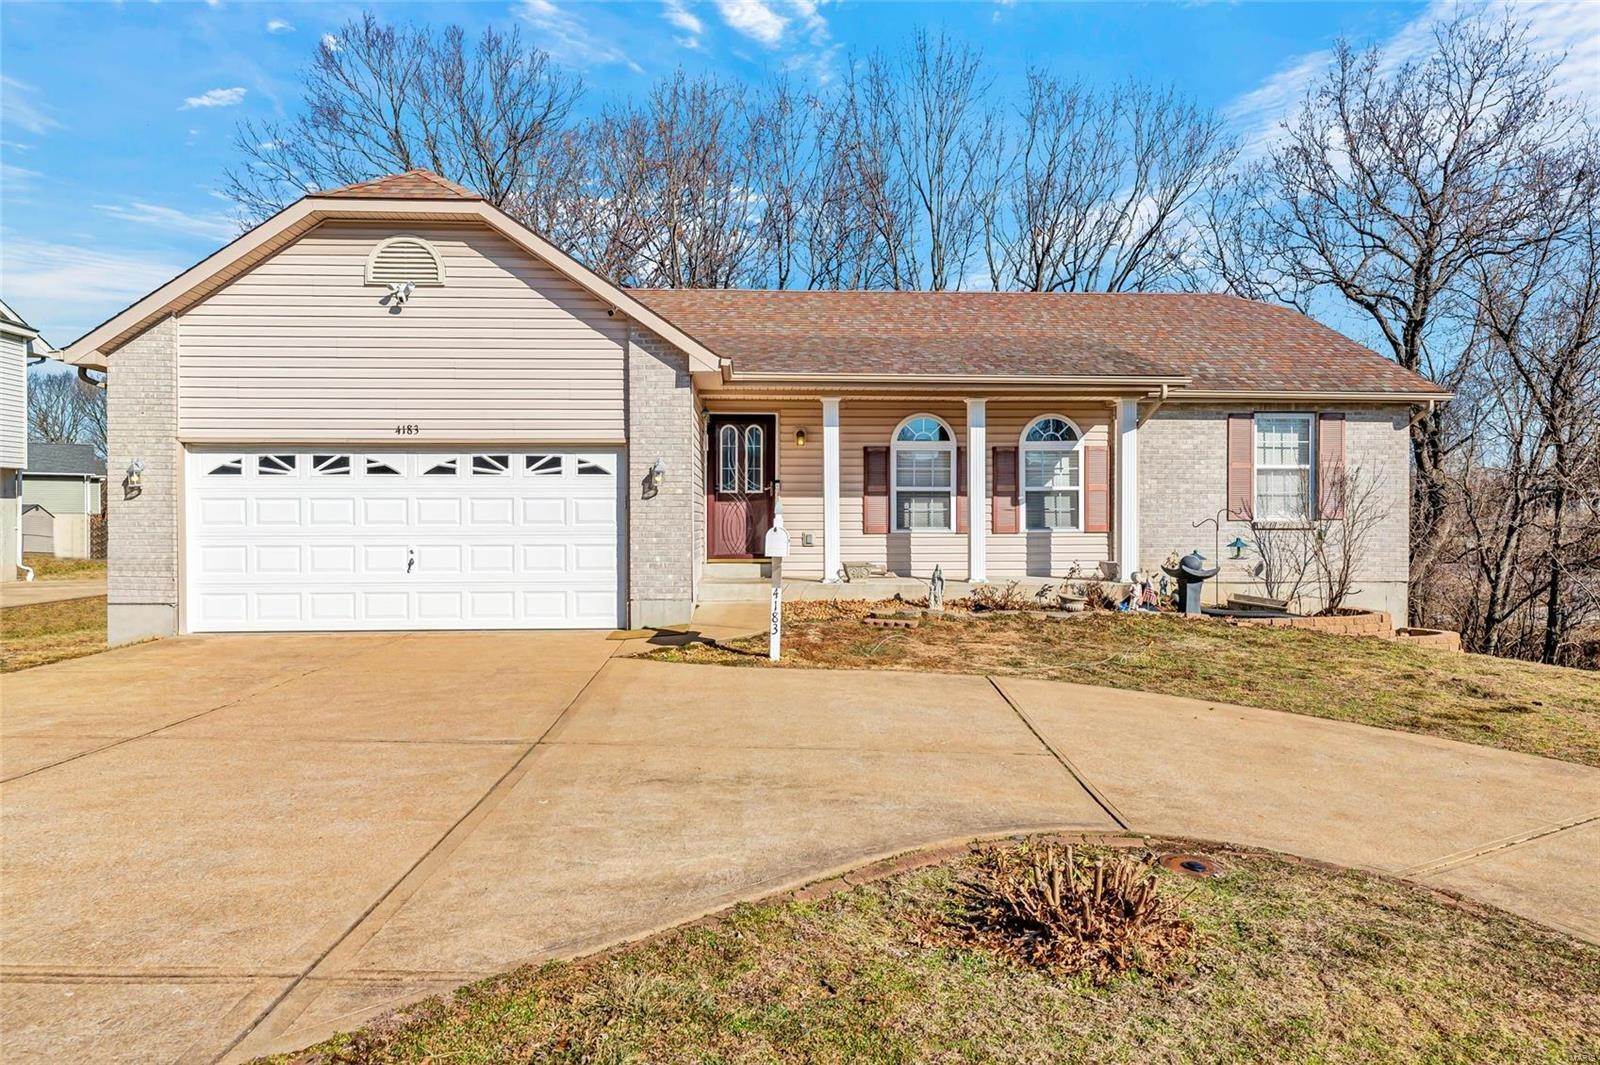 Single Family Homes for Sale at 4183 W Rock Creek Road High Ridge, Missouri 63049 United States